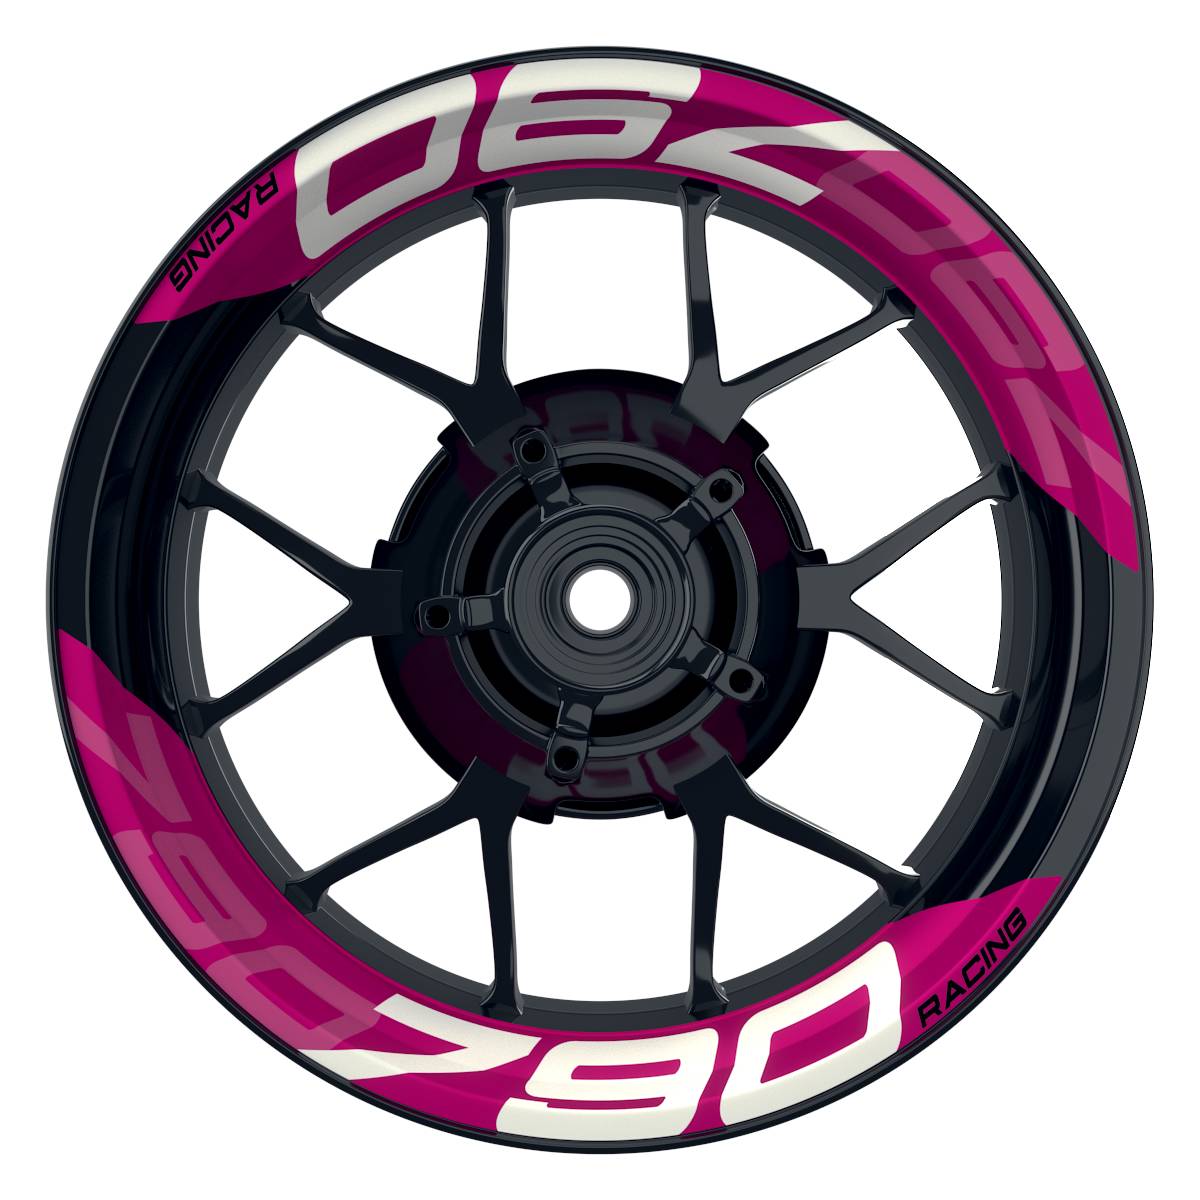 Wheelsticker Felgenaufkleber KTM Racing 790 einfarbig V2 pink Frontansicht